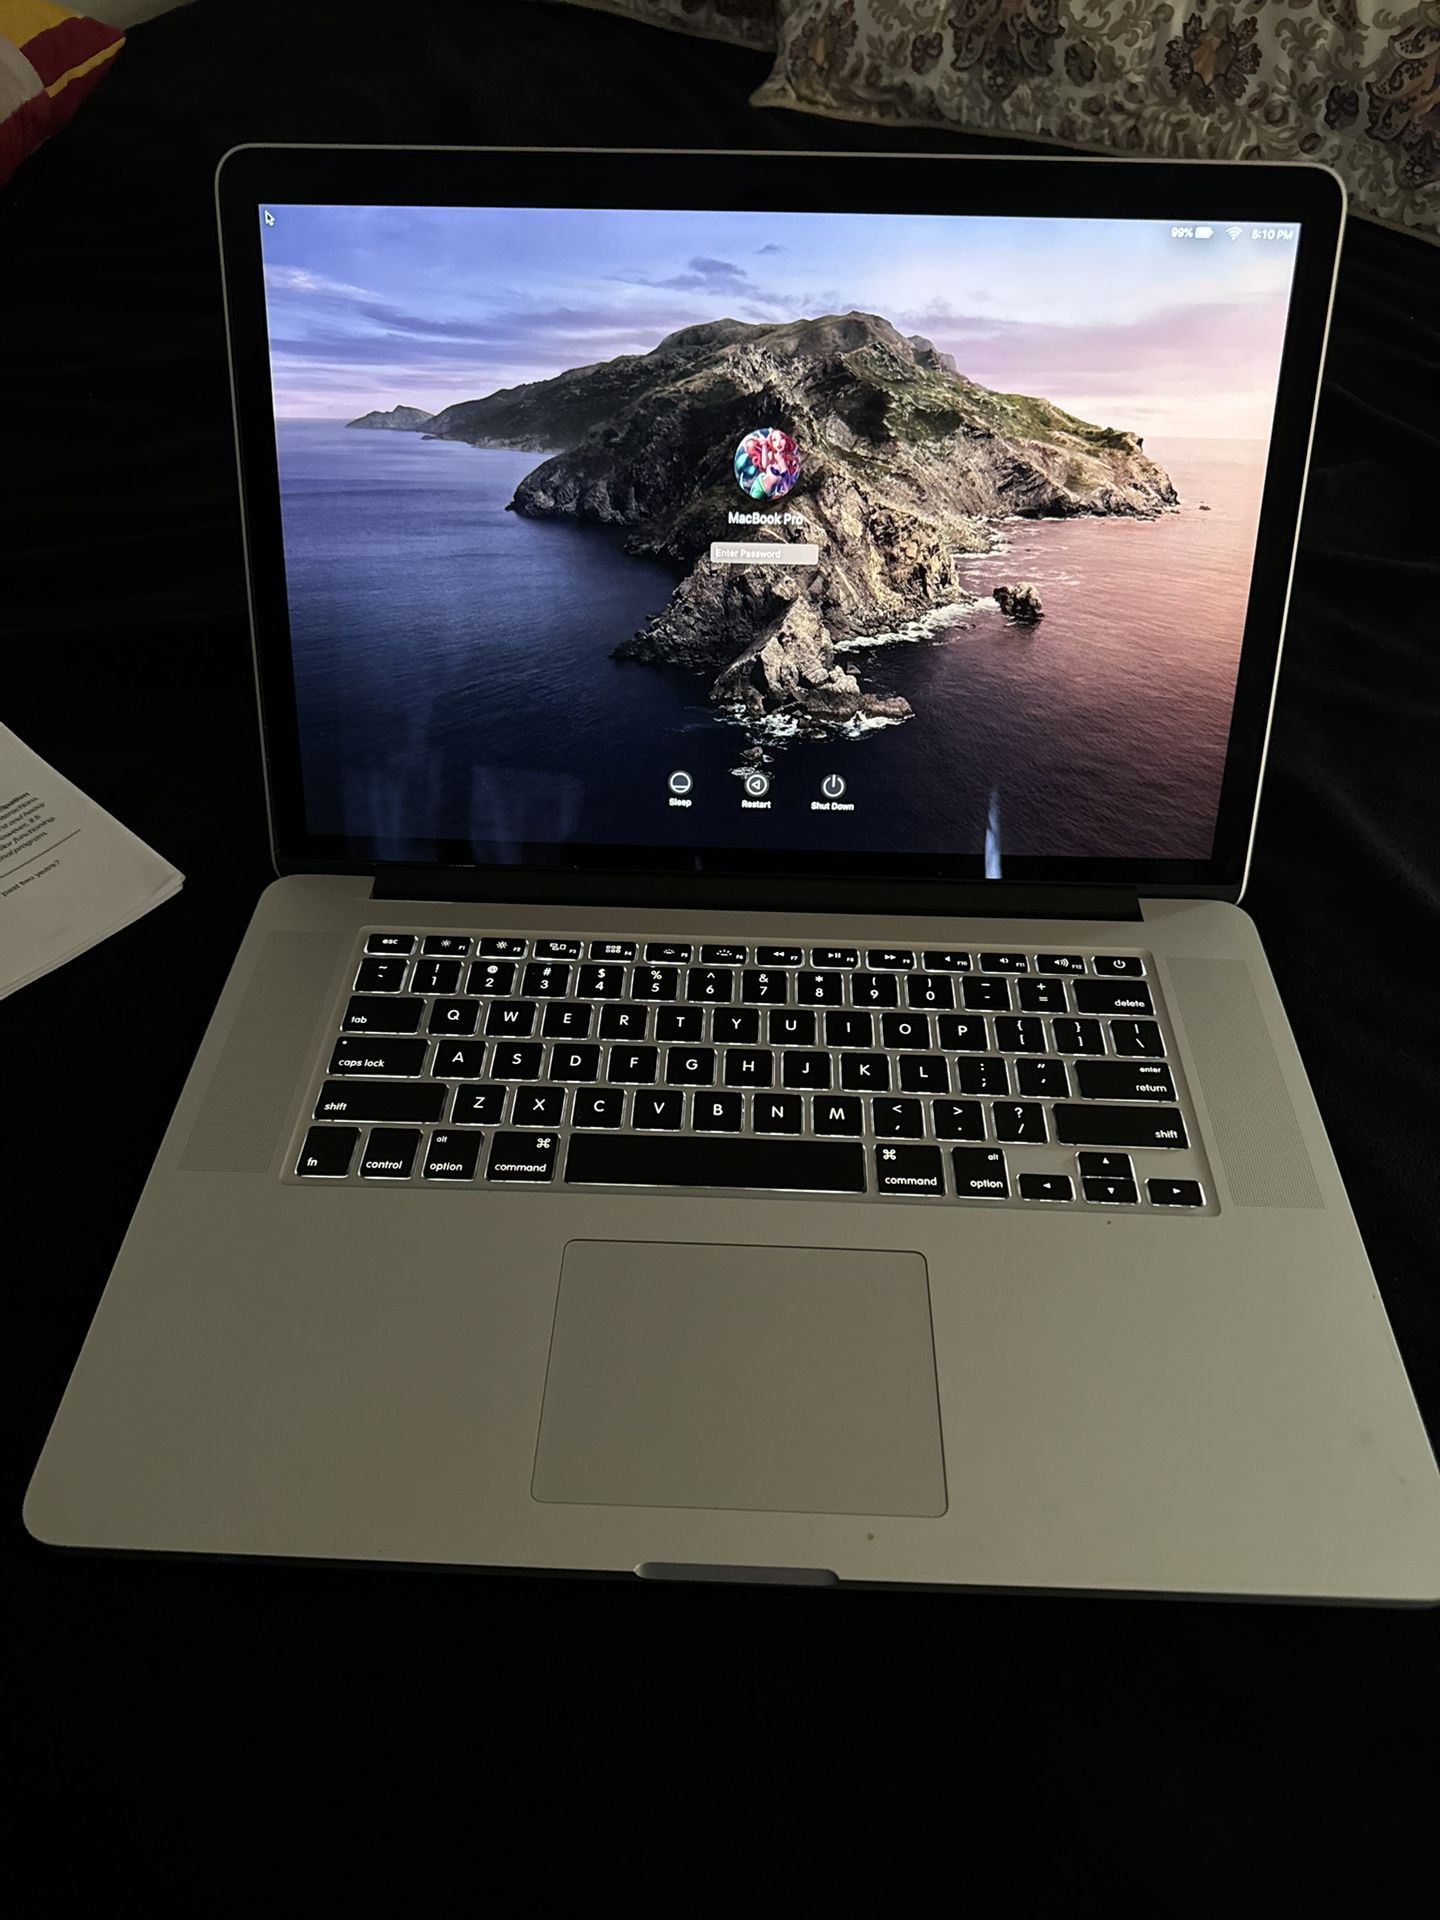  Mac Pro, Apple laptop